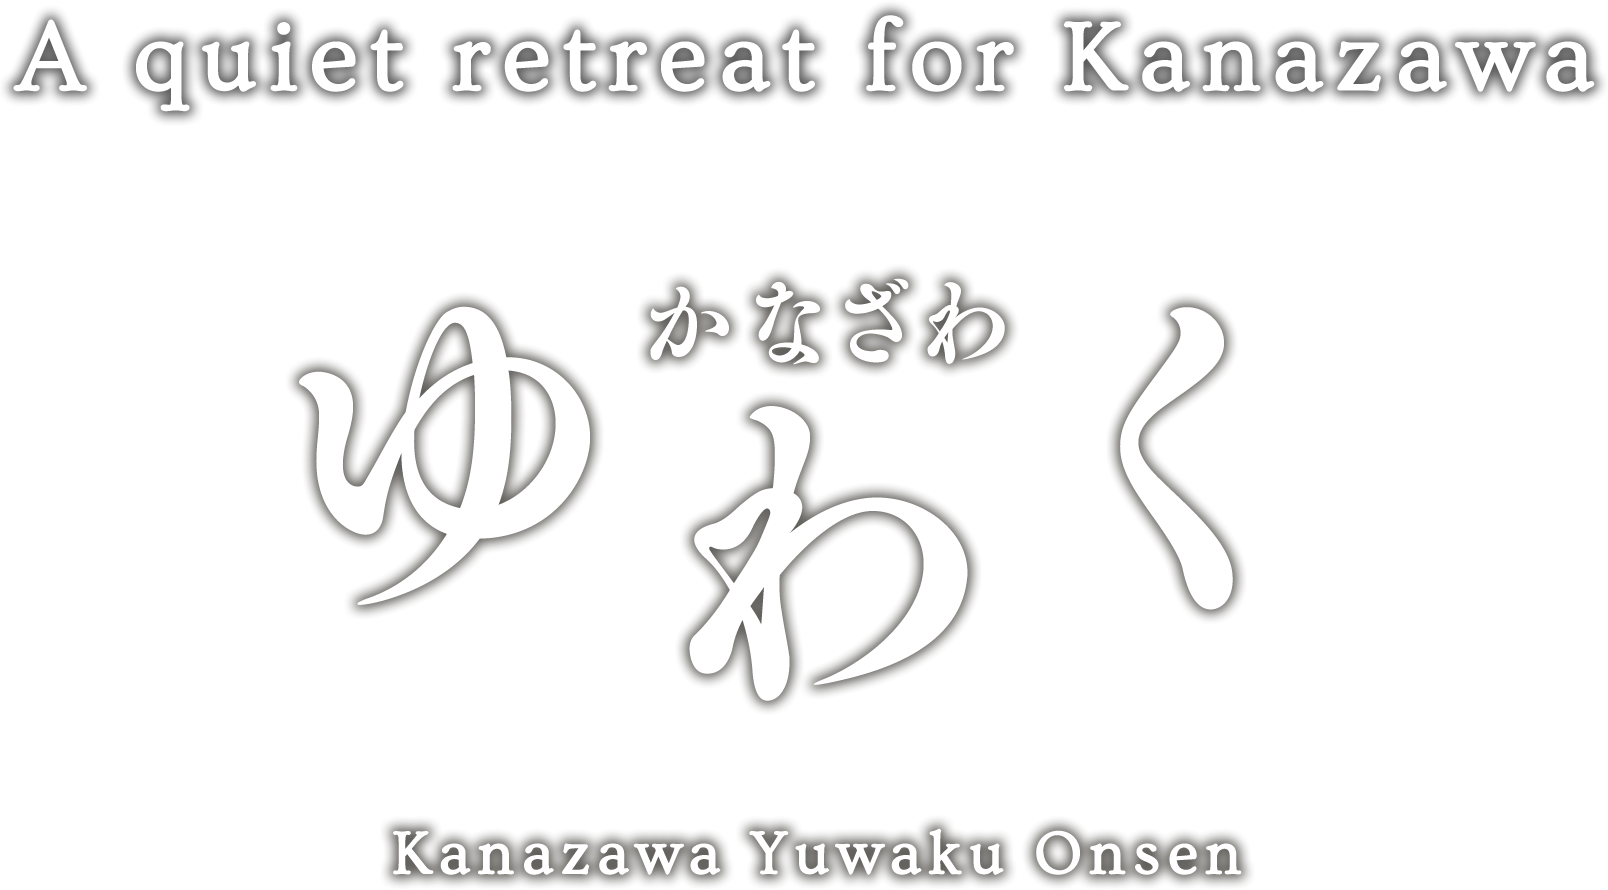 A quiet retreat for Kanazawa